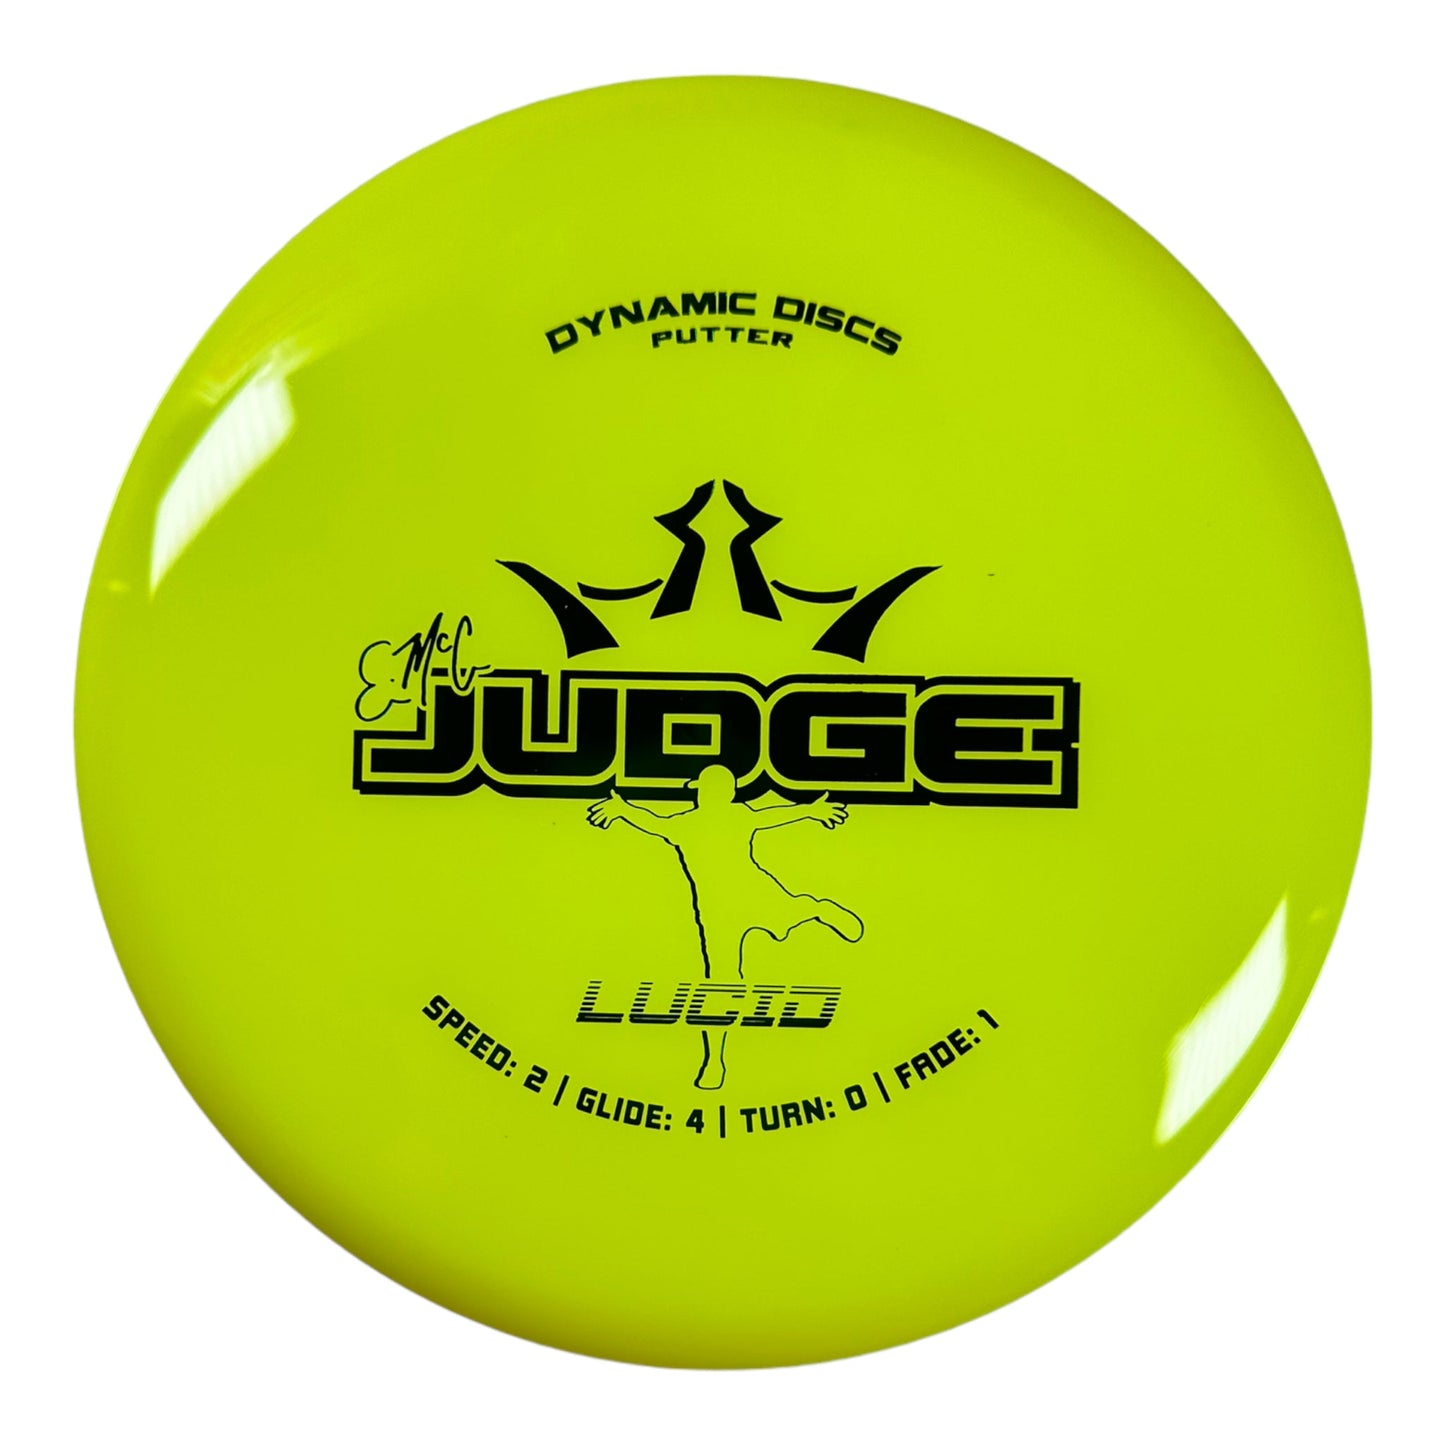 Dynamic Discs EMAC Judge | Lucid | Yellow/Green 174g Disc Golf